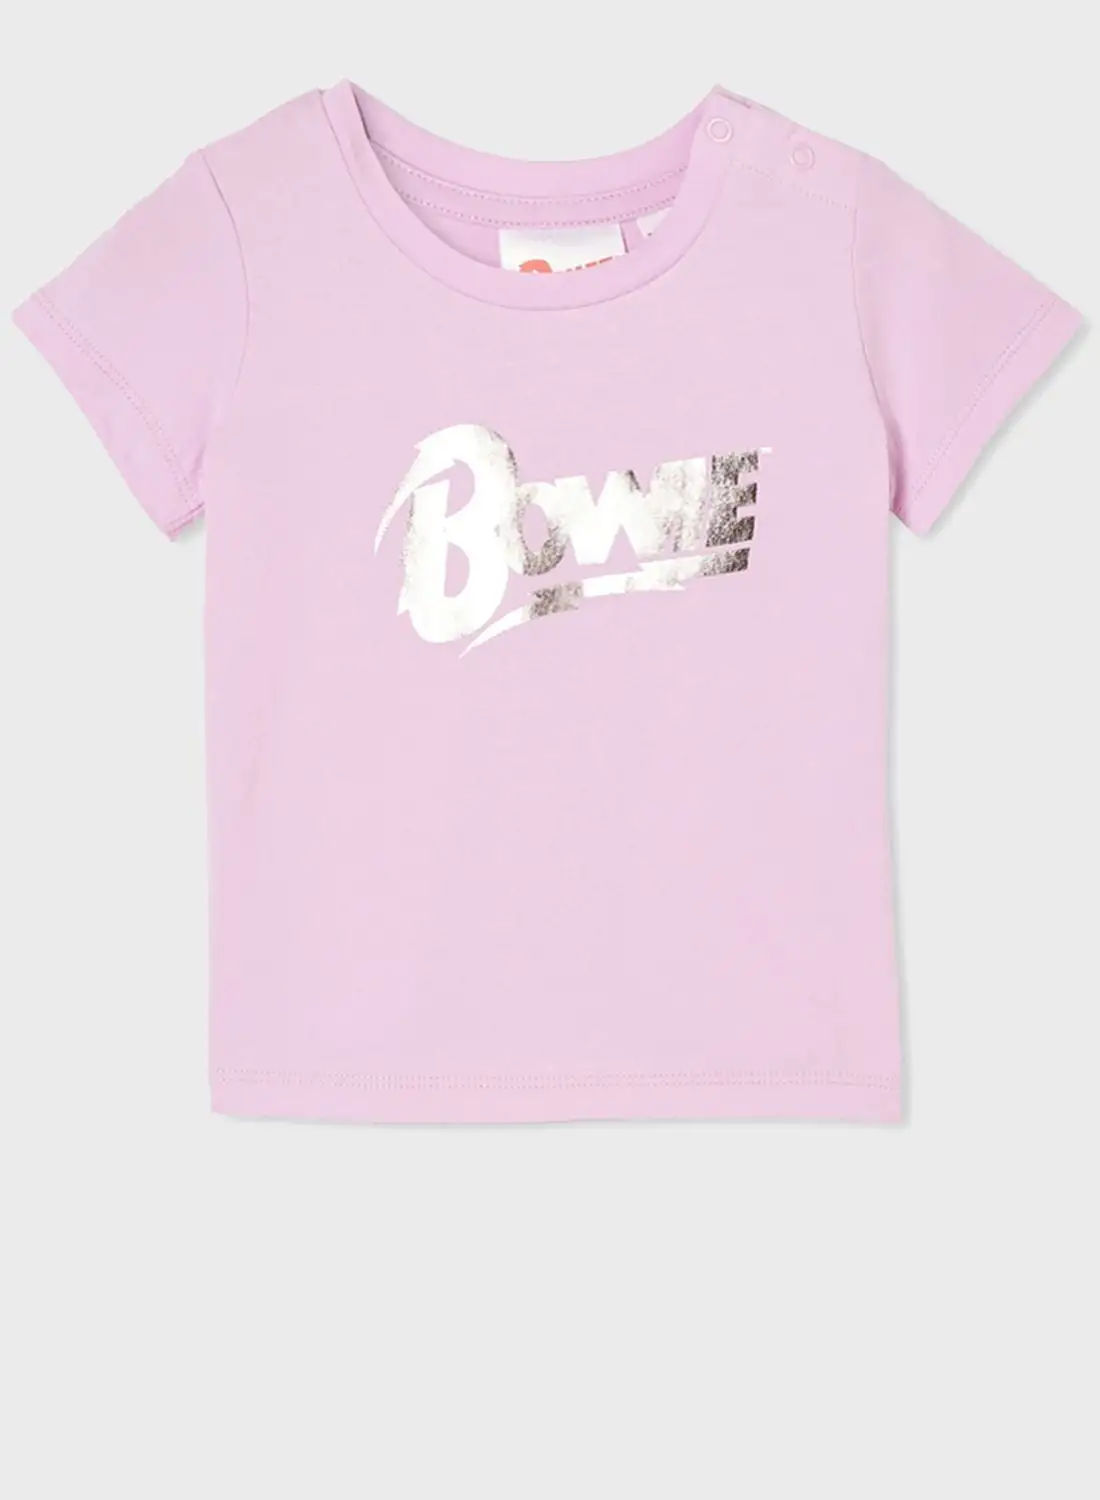 Cotton On Infant Graphic T-Shirt